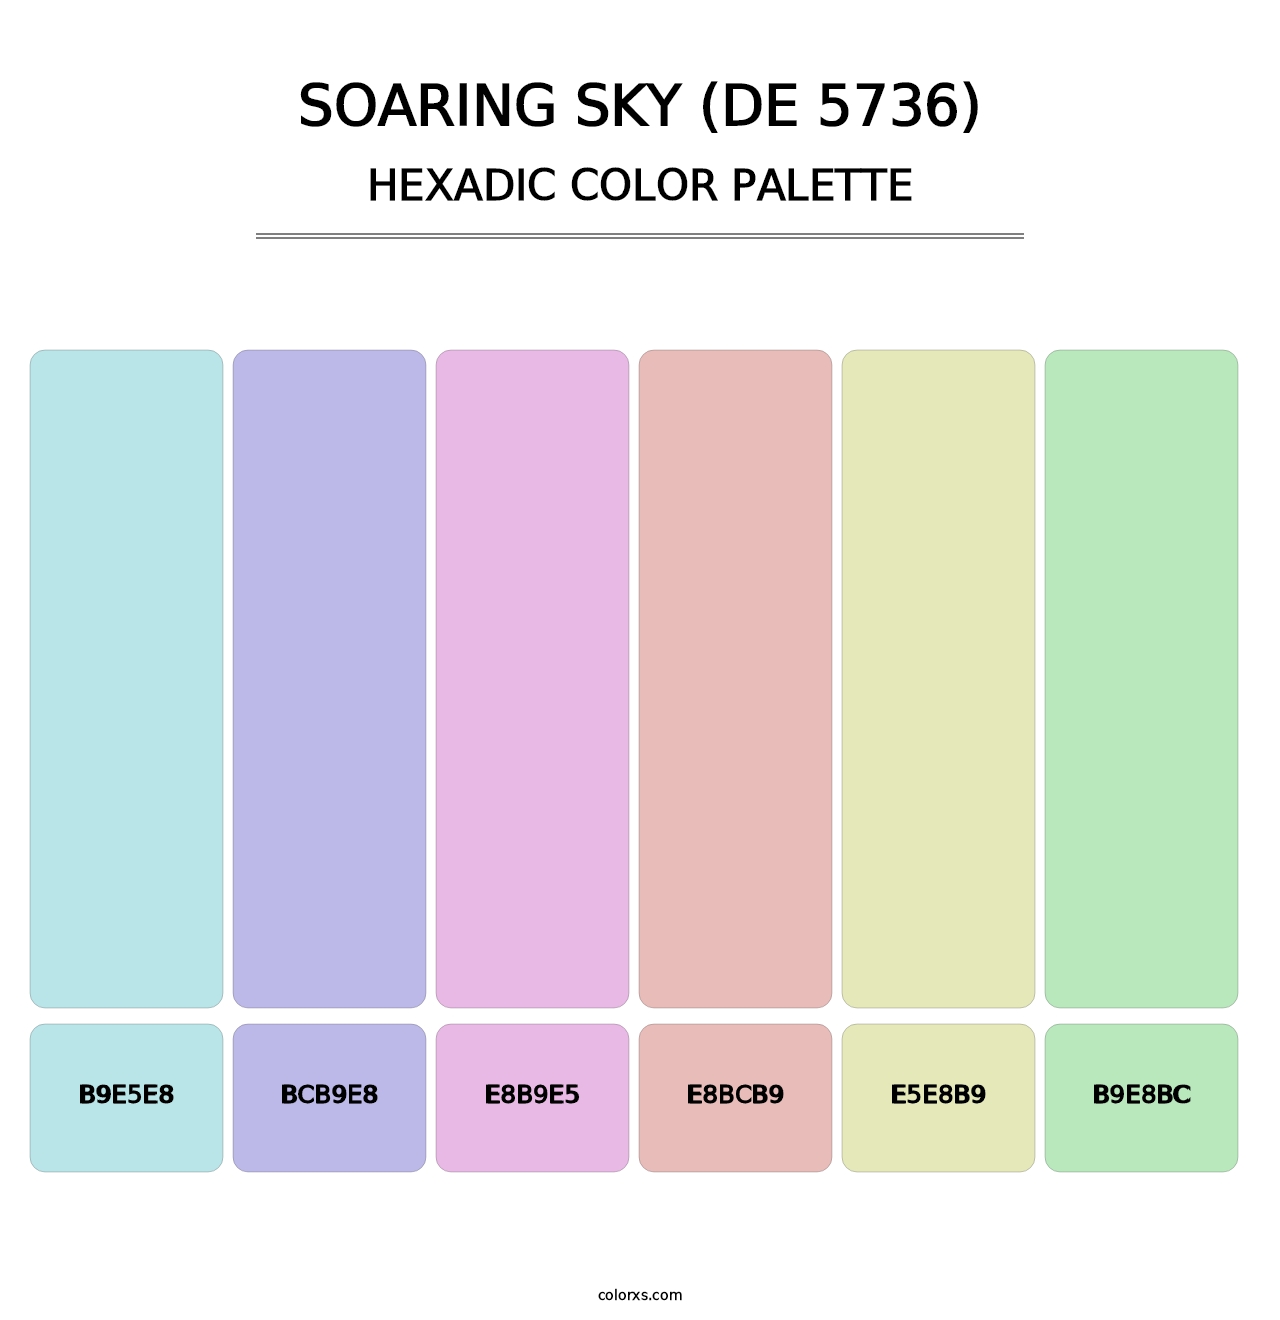 Soaring Sky (DE 5736) - Hexadic Color Palette